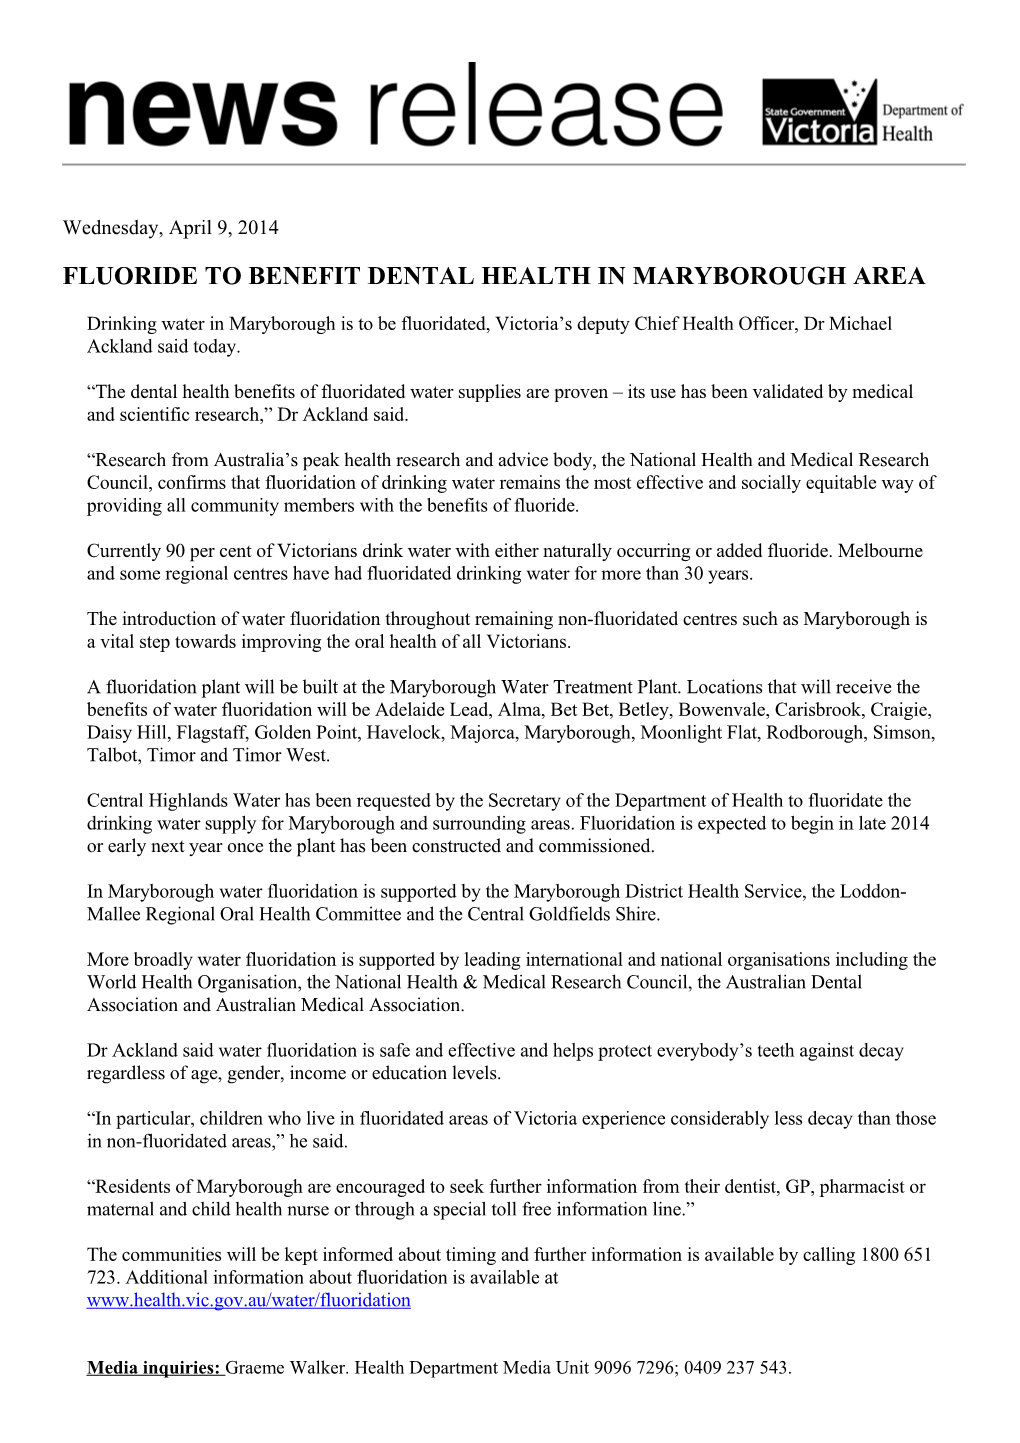 Fluoride to Benefit Dental Health in Maryborough Area